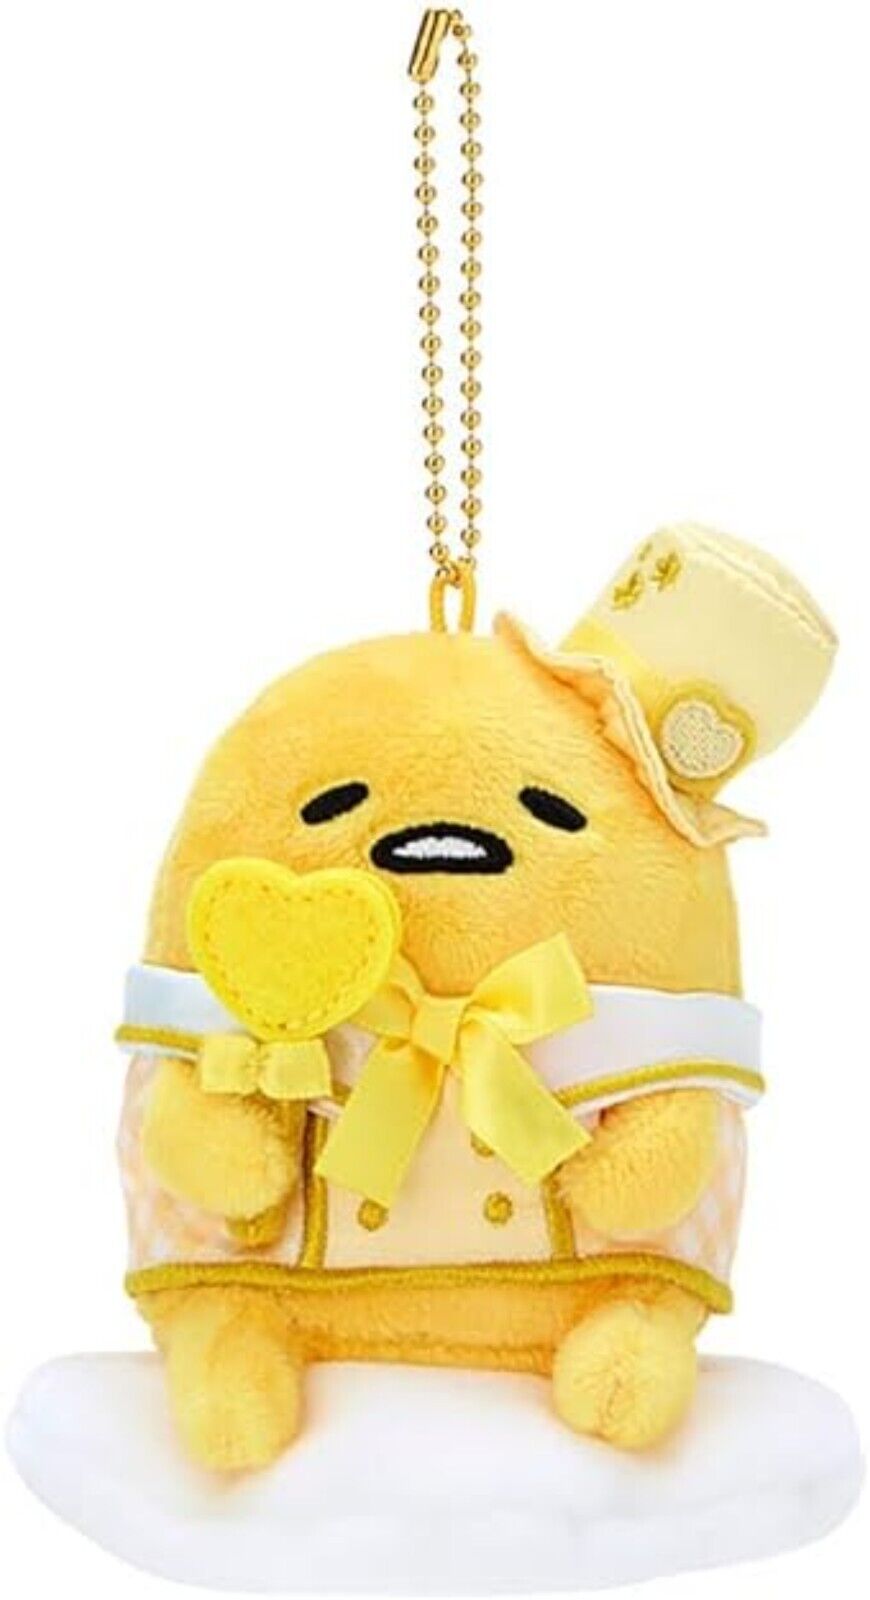 Sanrio Character Gudetama Mascot Chain (Like Even More) Plush Doll New Japan